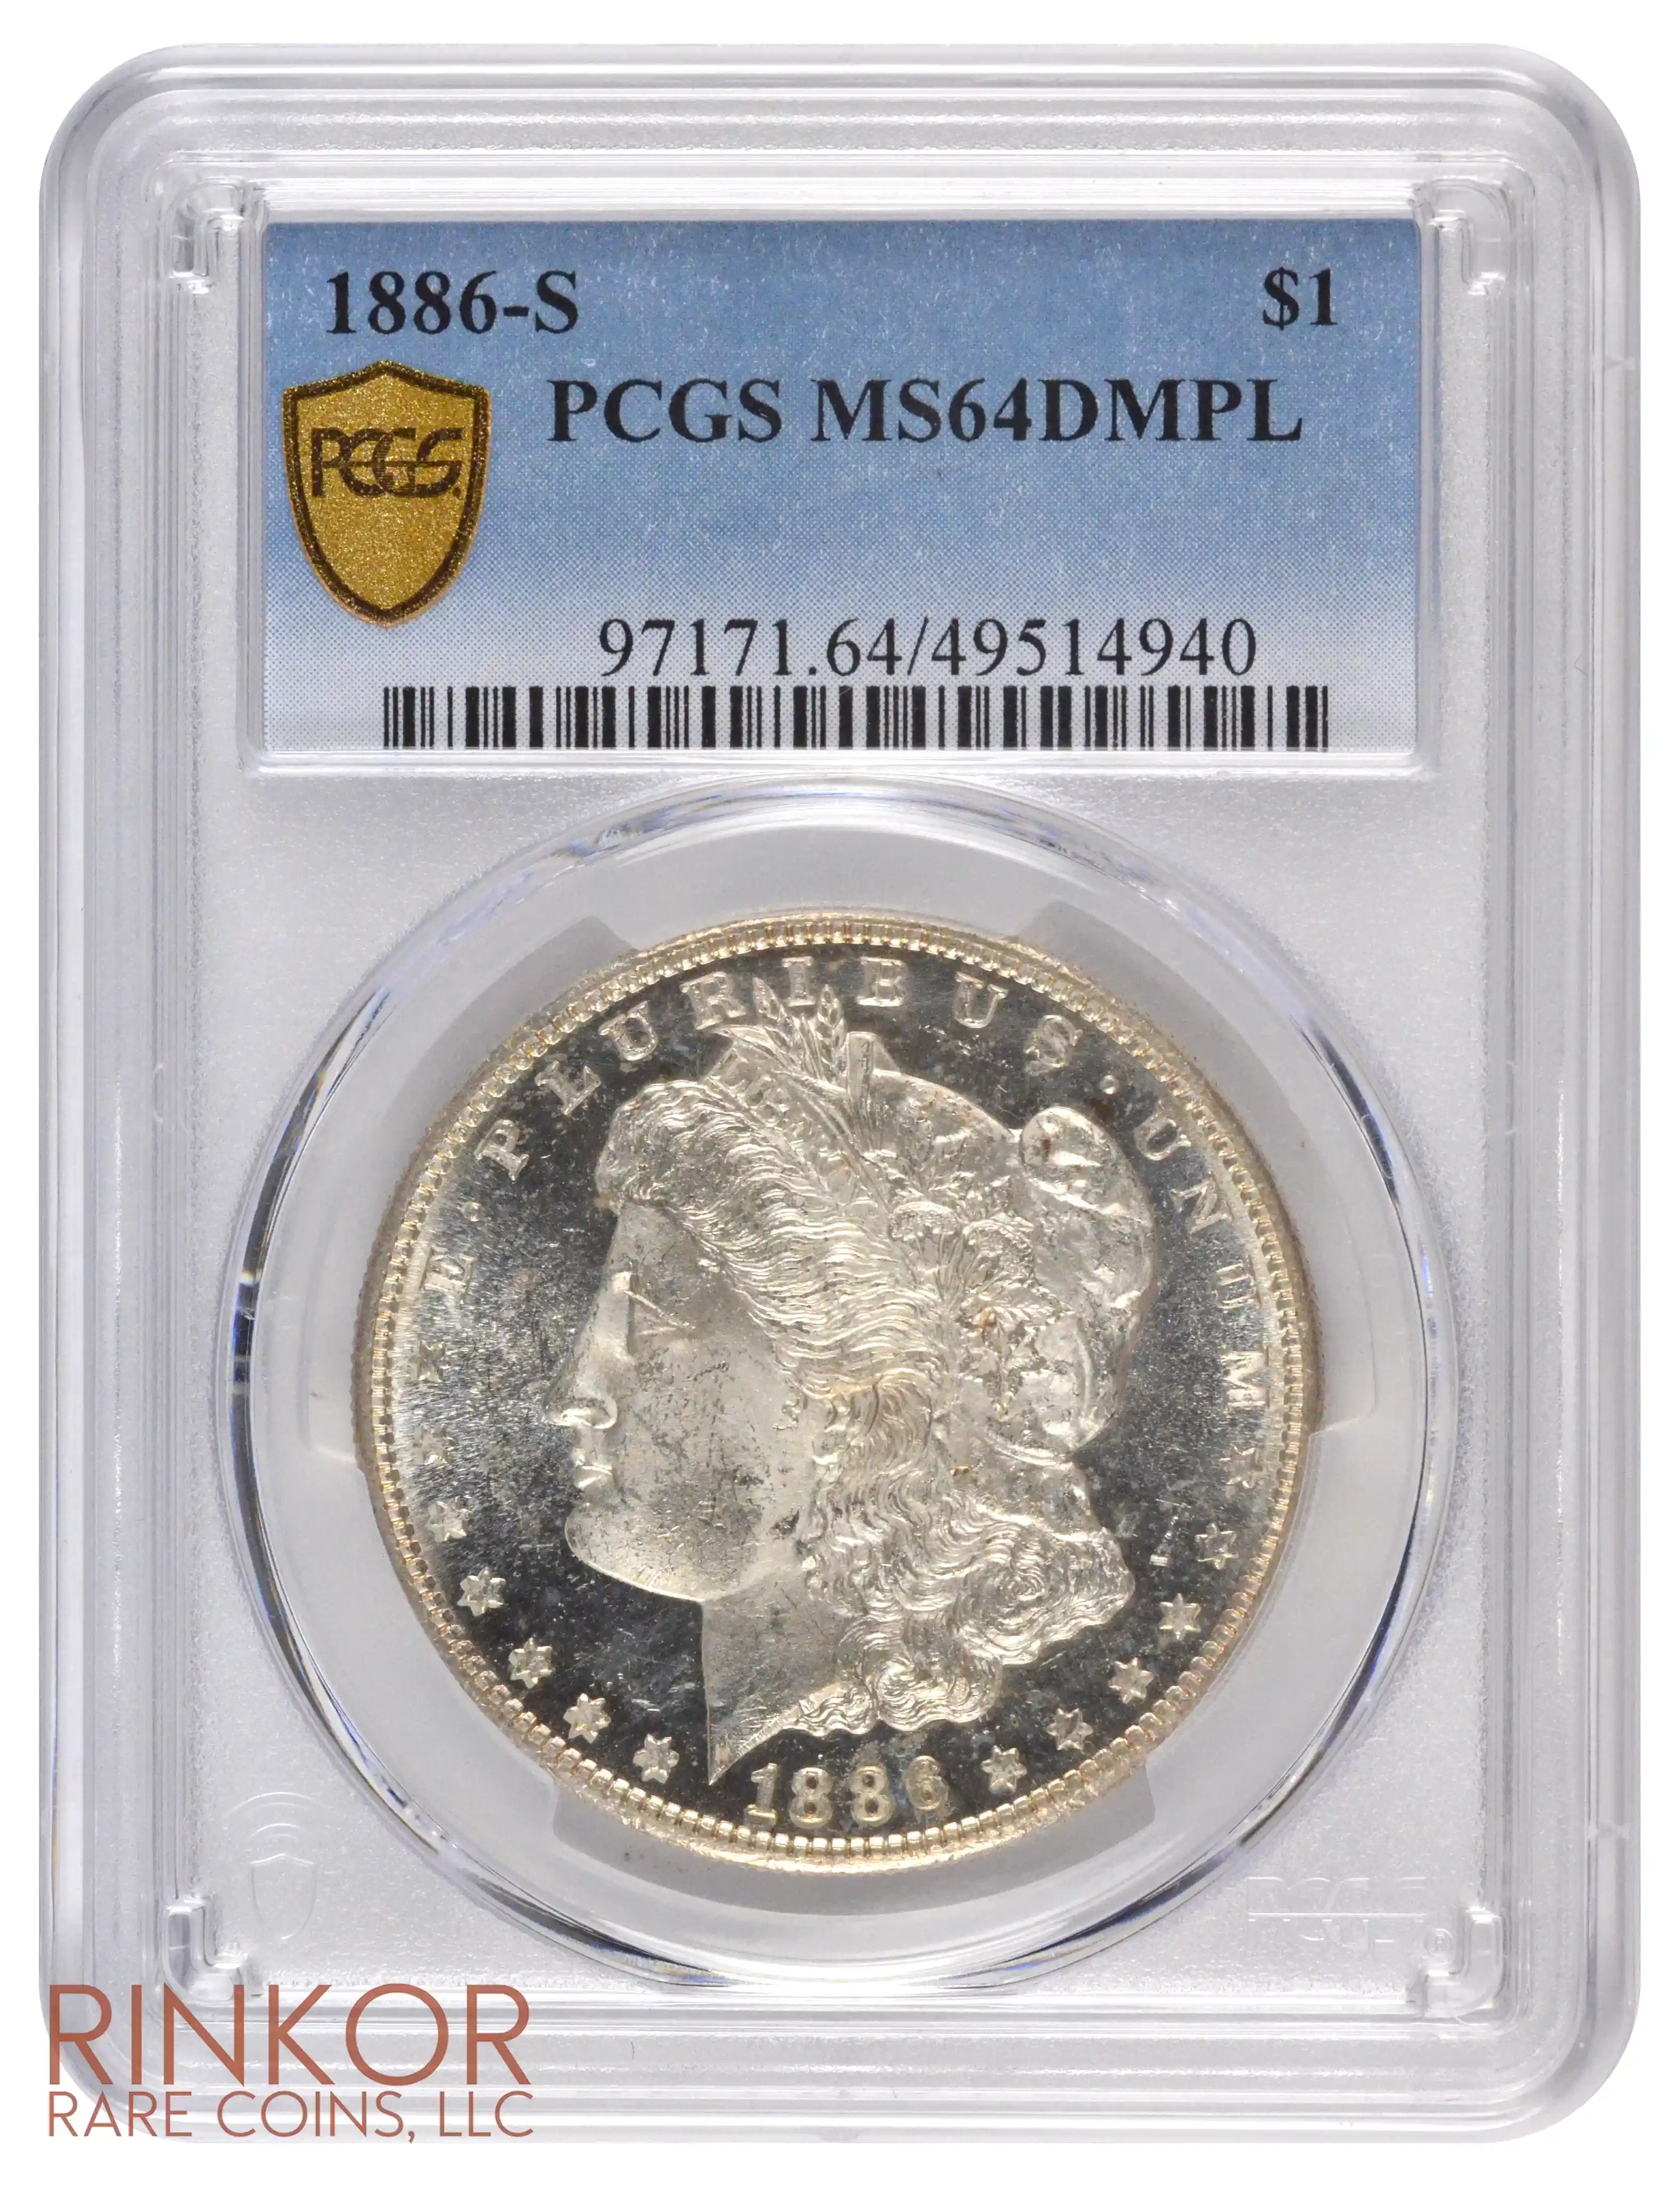 1886-S $1 PCGS MS 64 DMPL